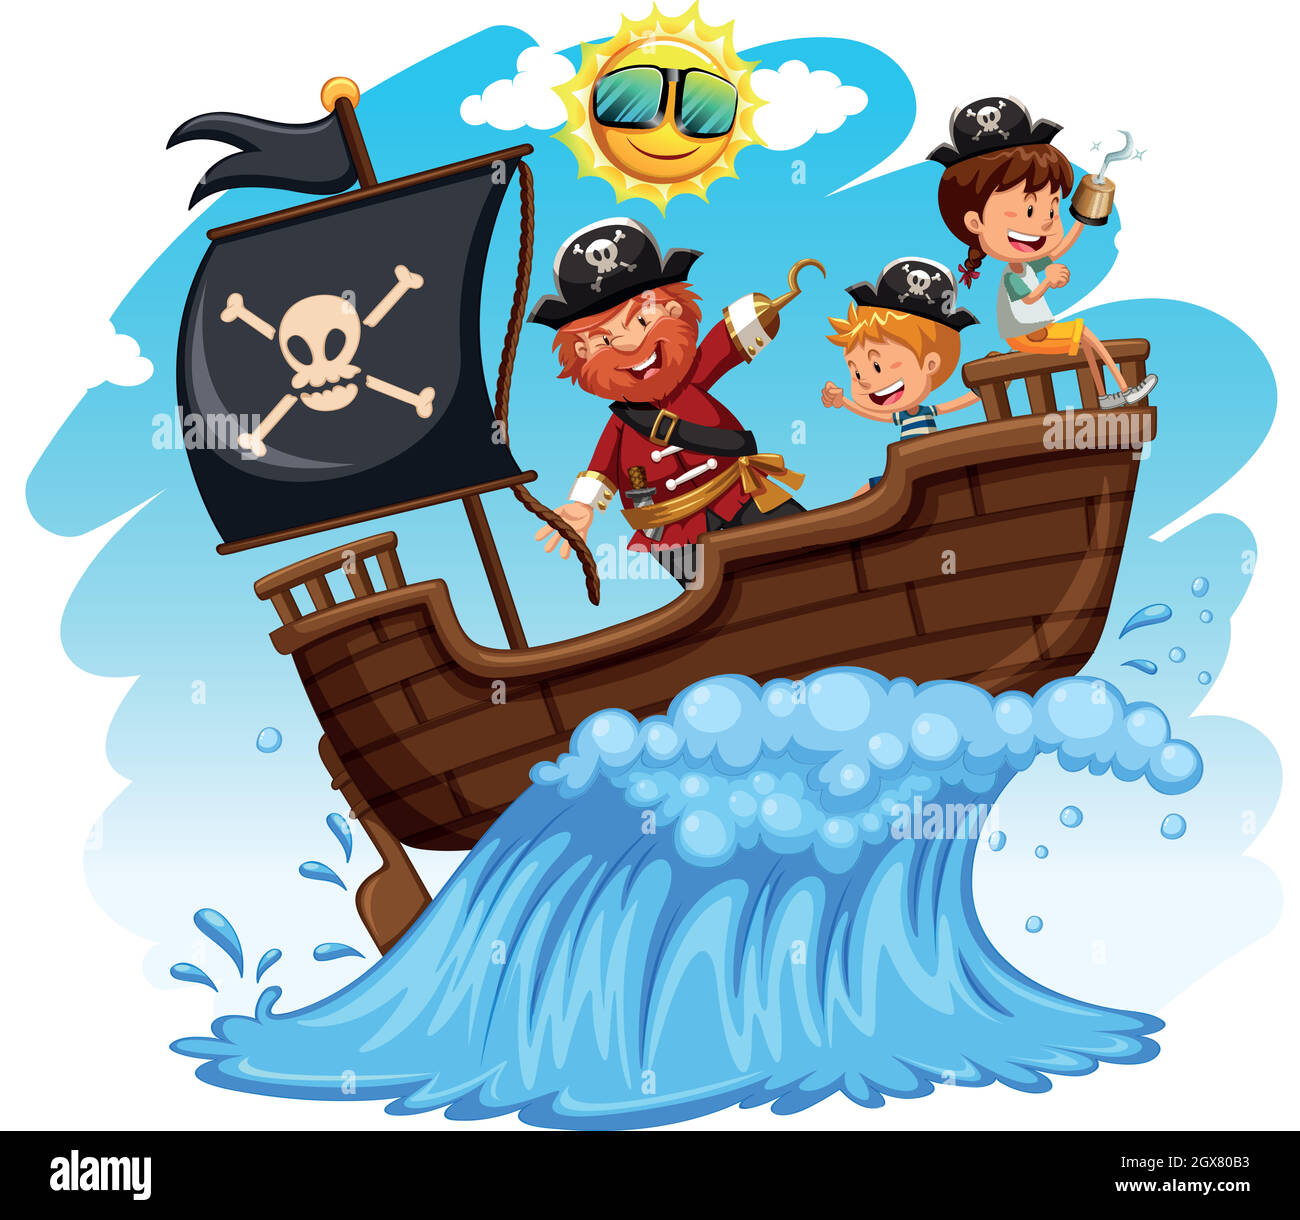 Piratenspass und Kinderspass Stock Vektor